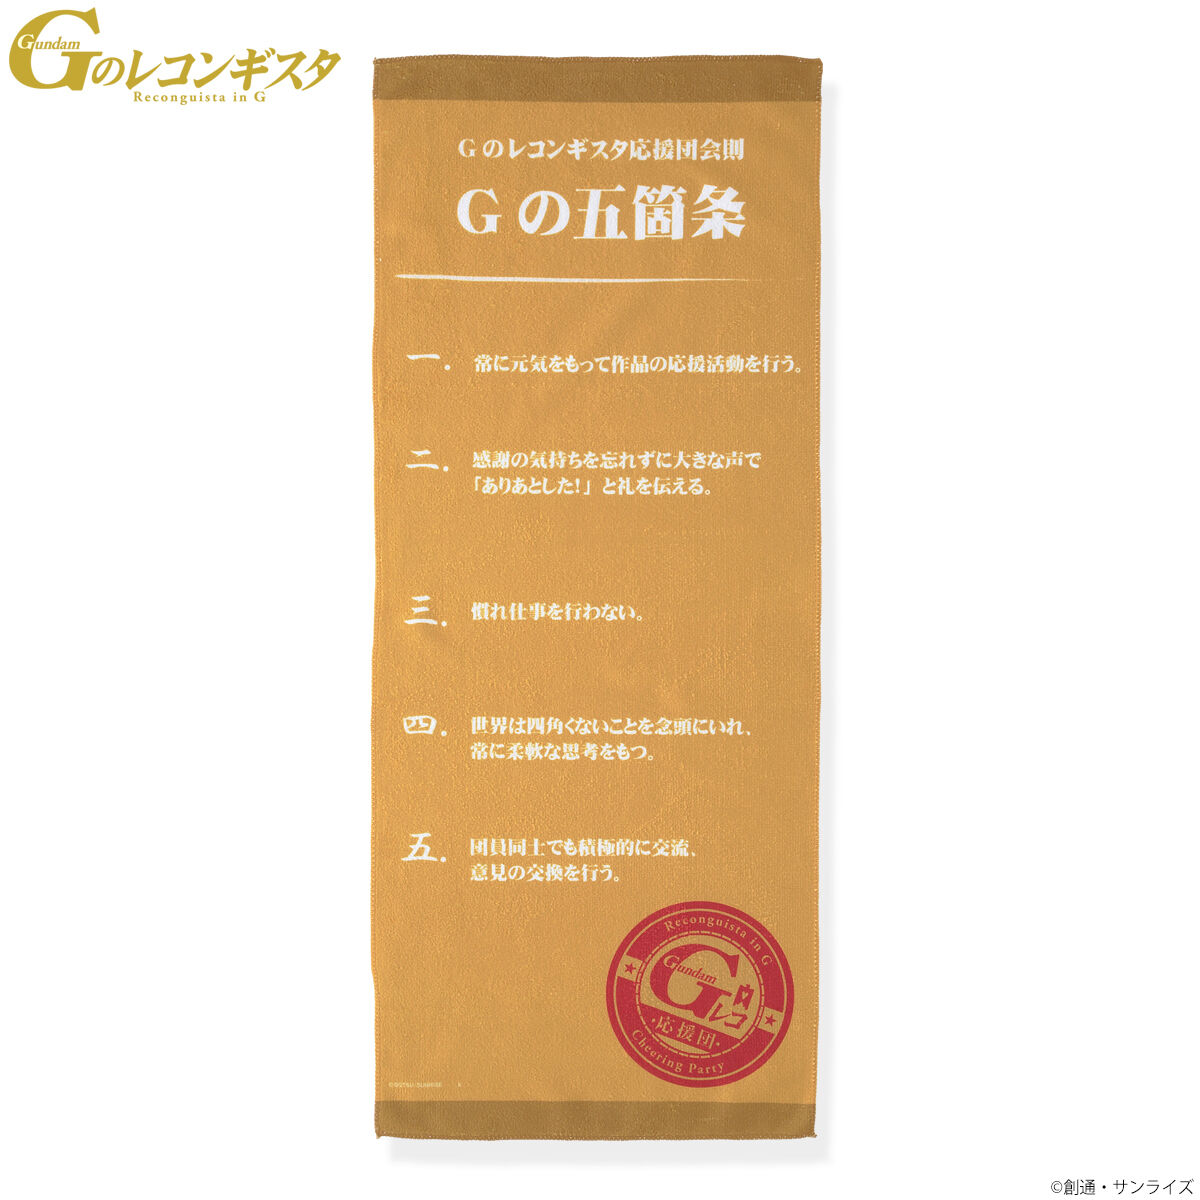 Gundam Reconguista in G Cheering Party Towel—Gundam Reconguista in G